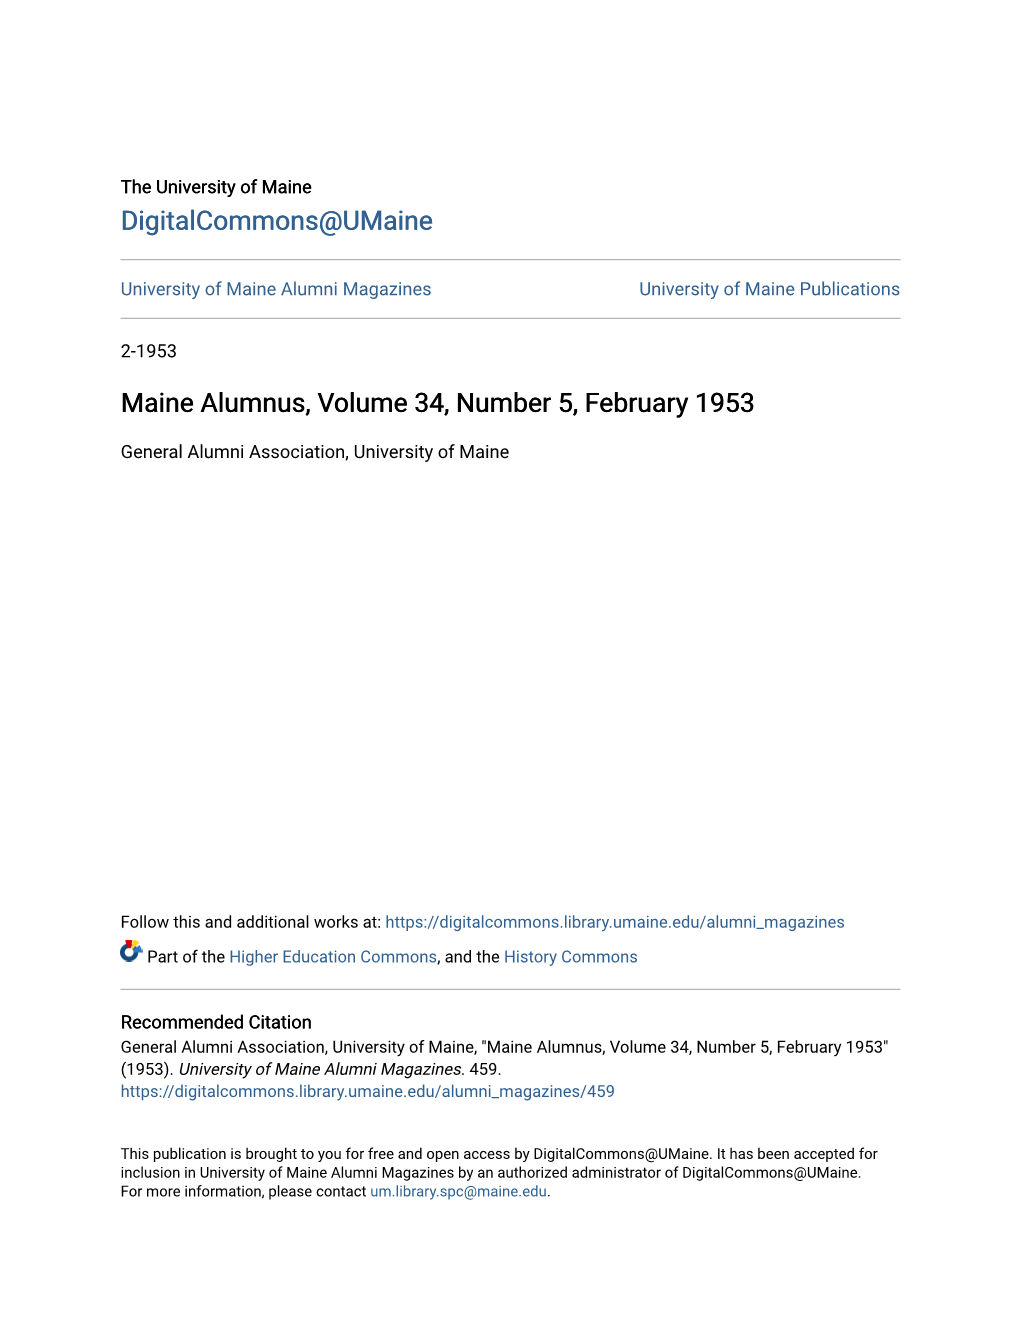 Maine Alumnus, Volume 34, Number 5, February 1953